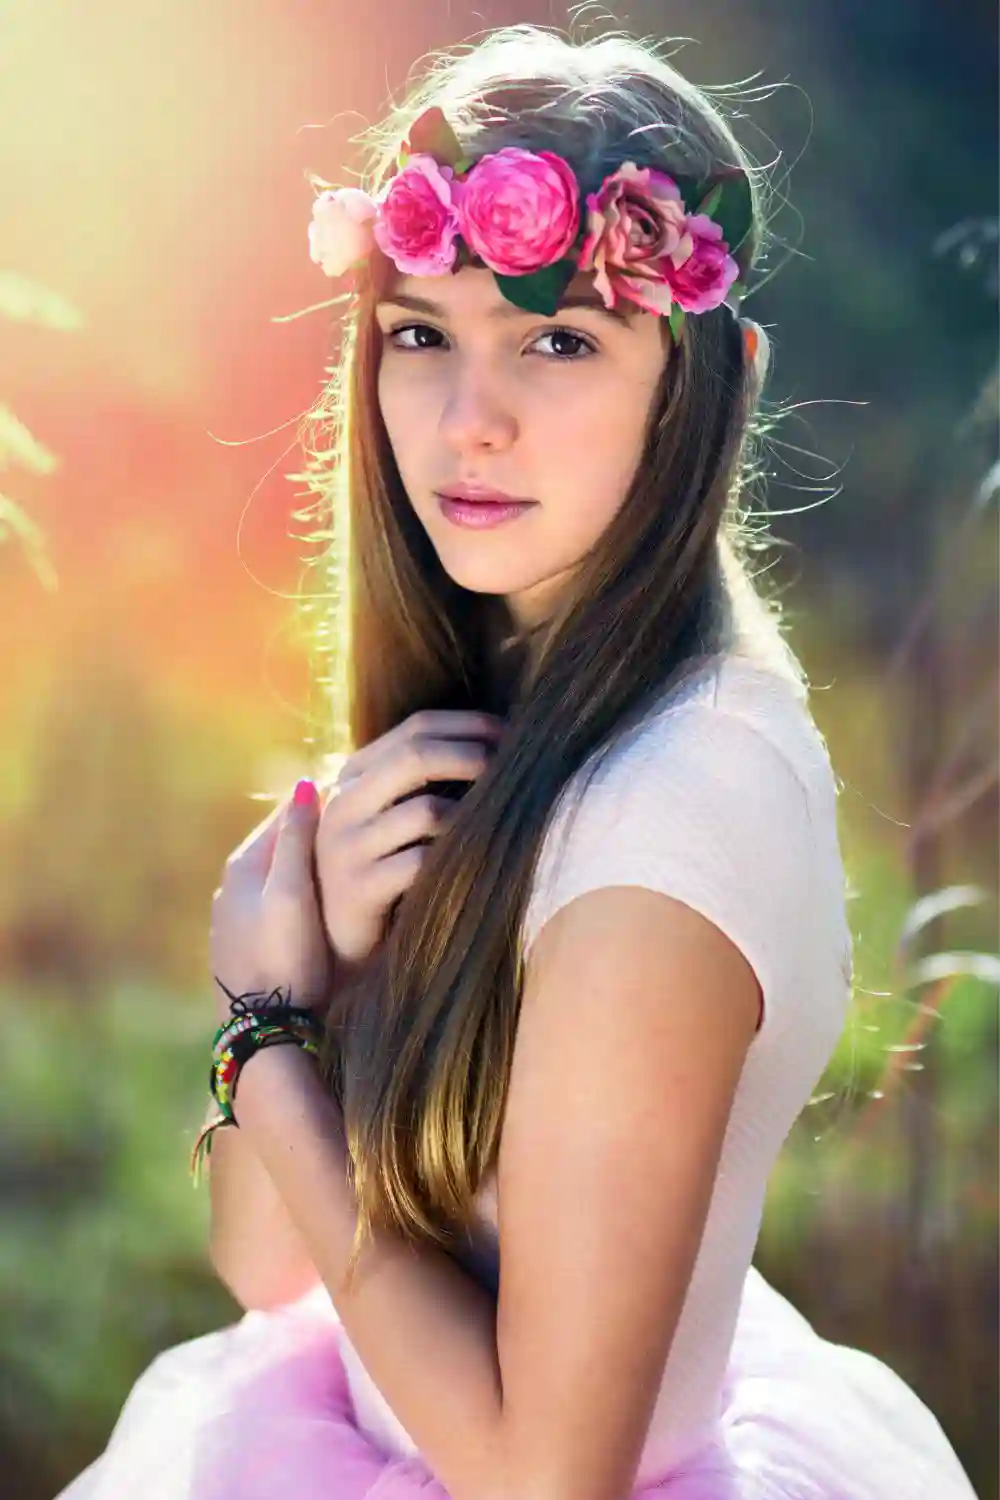 Beautiful girl with flower tiara